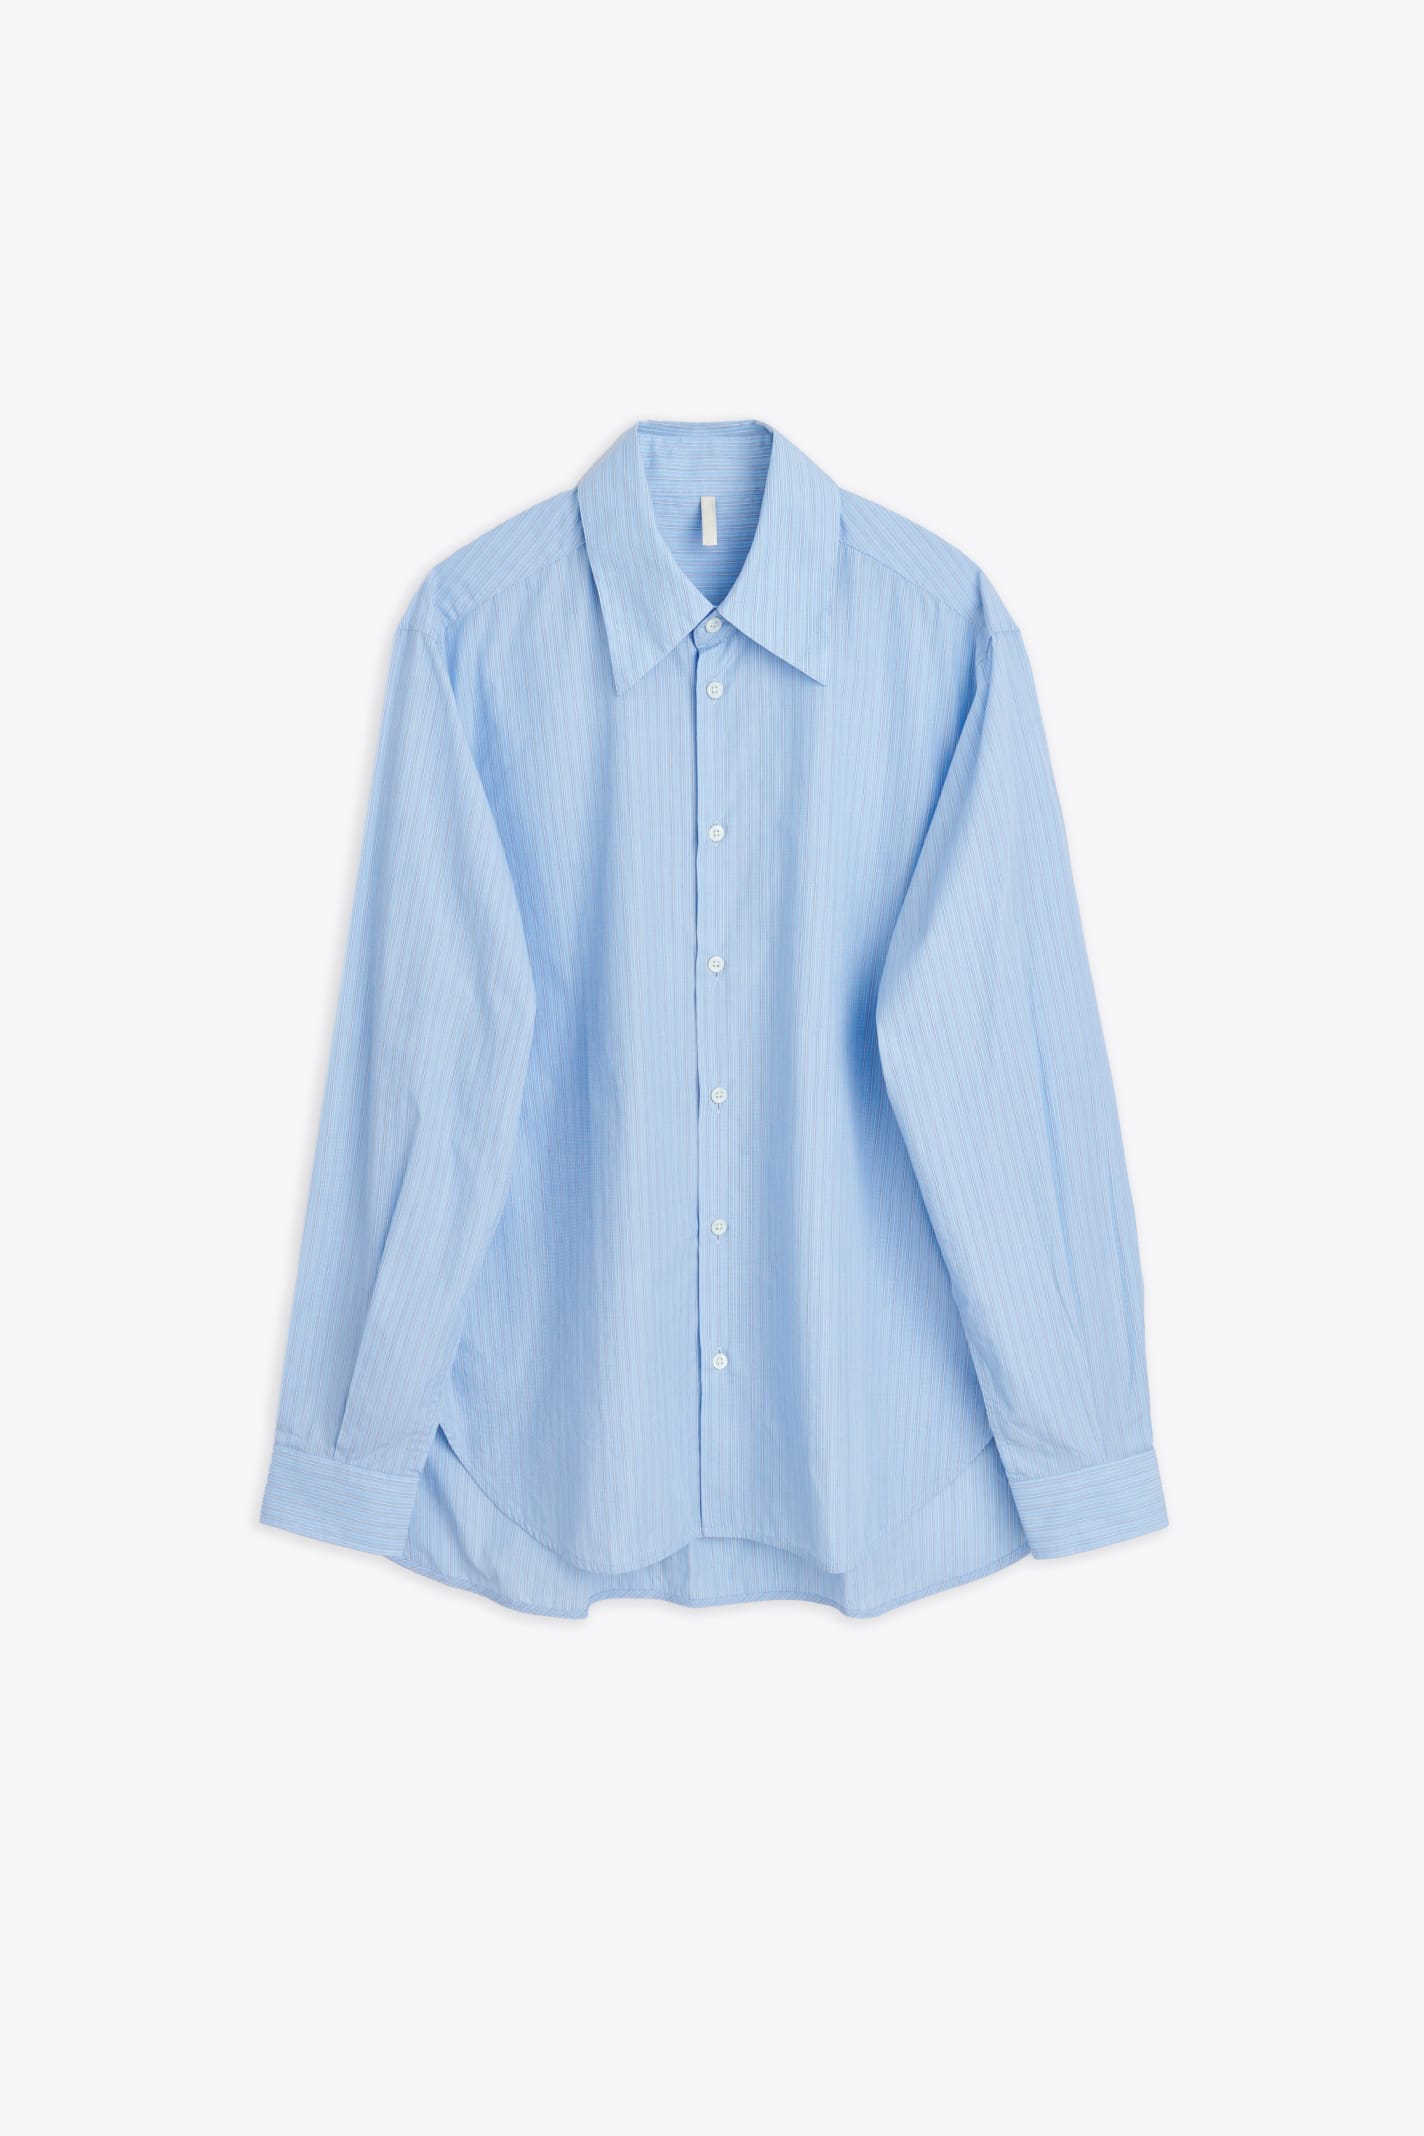 #1203 Sky blue striped poplin shirt with long sleeves - Please Shirt